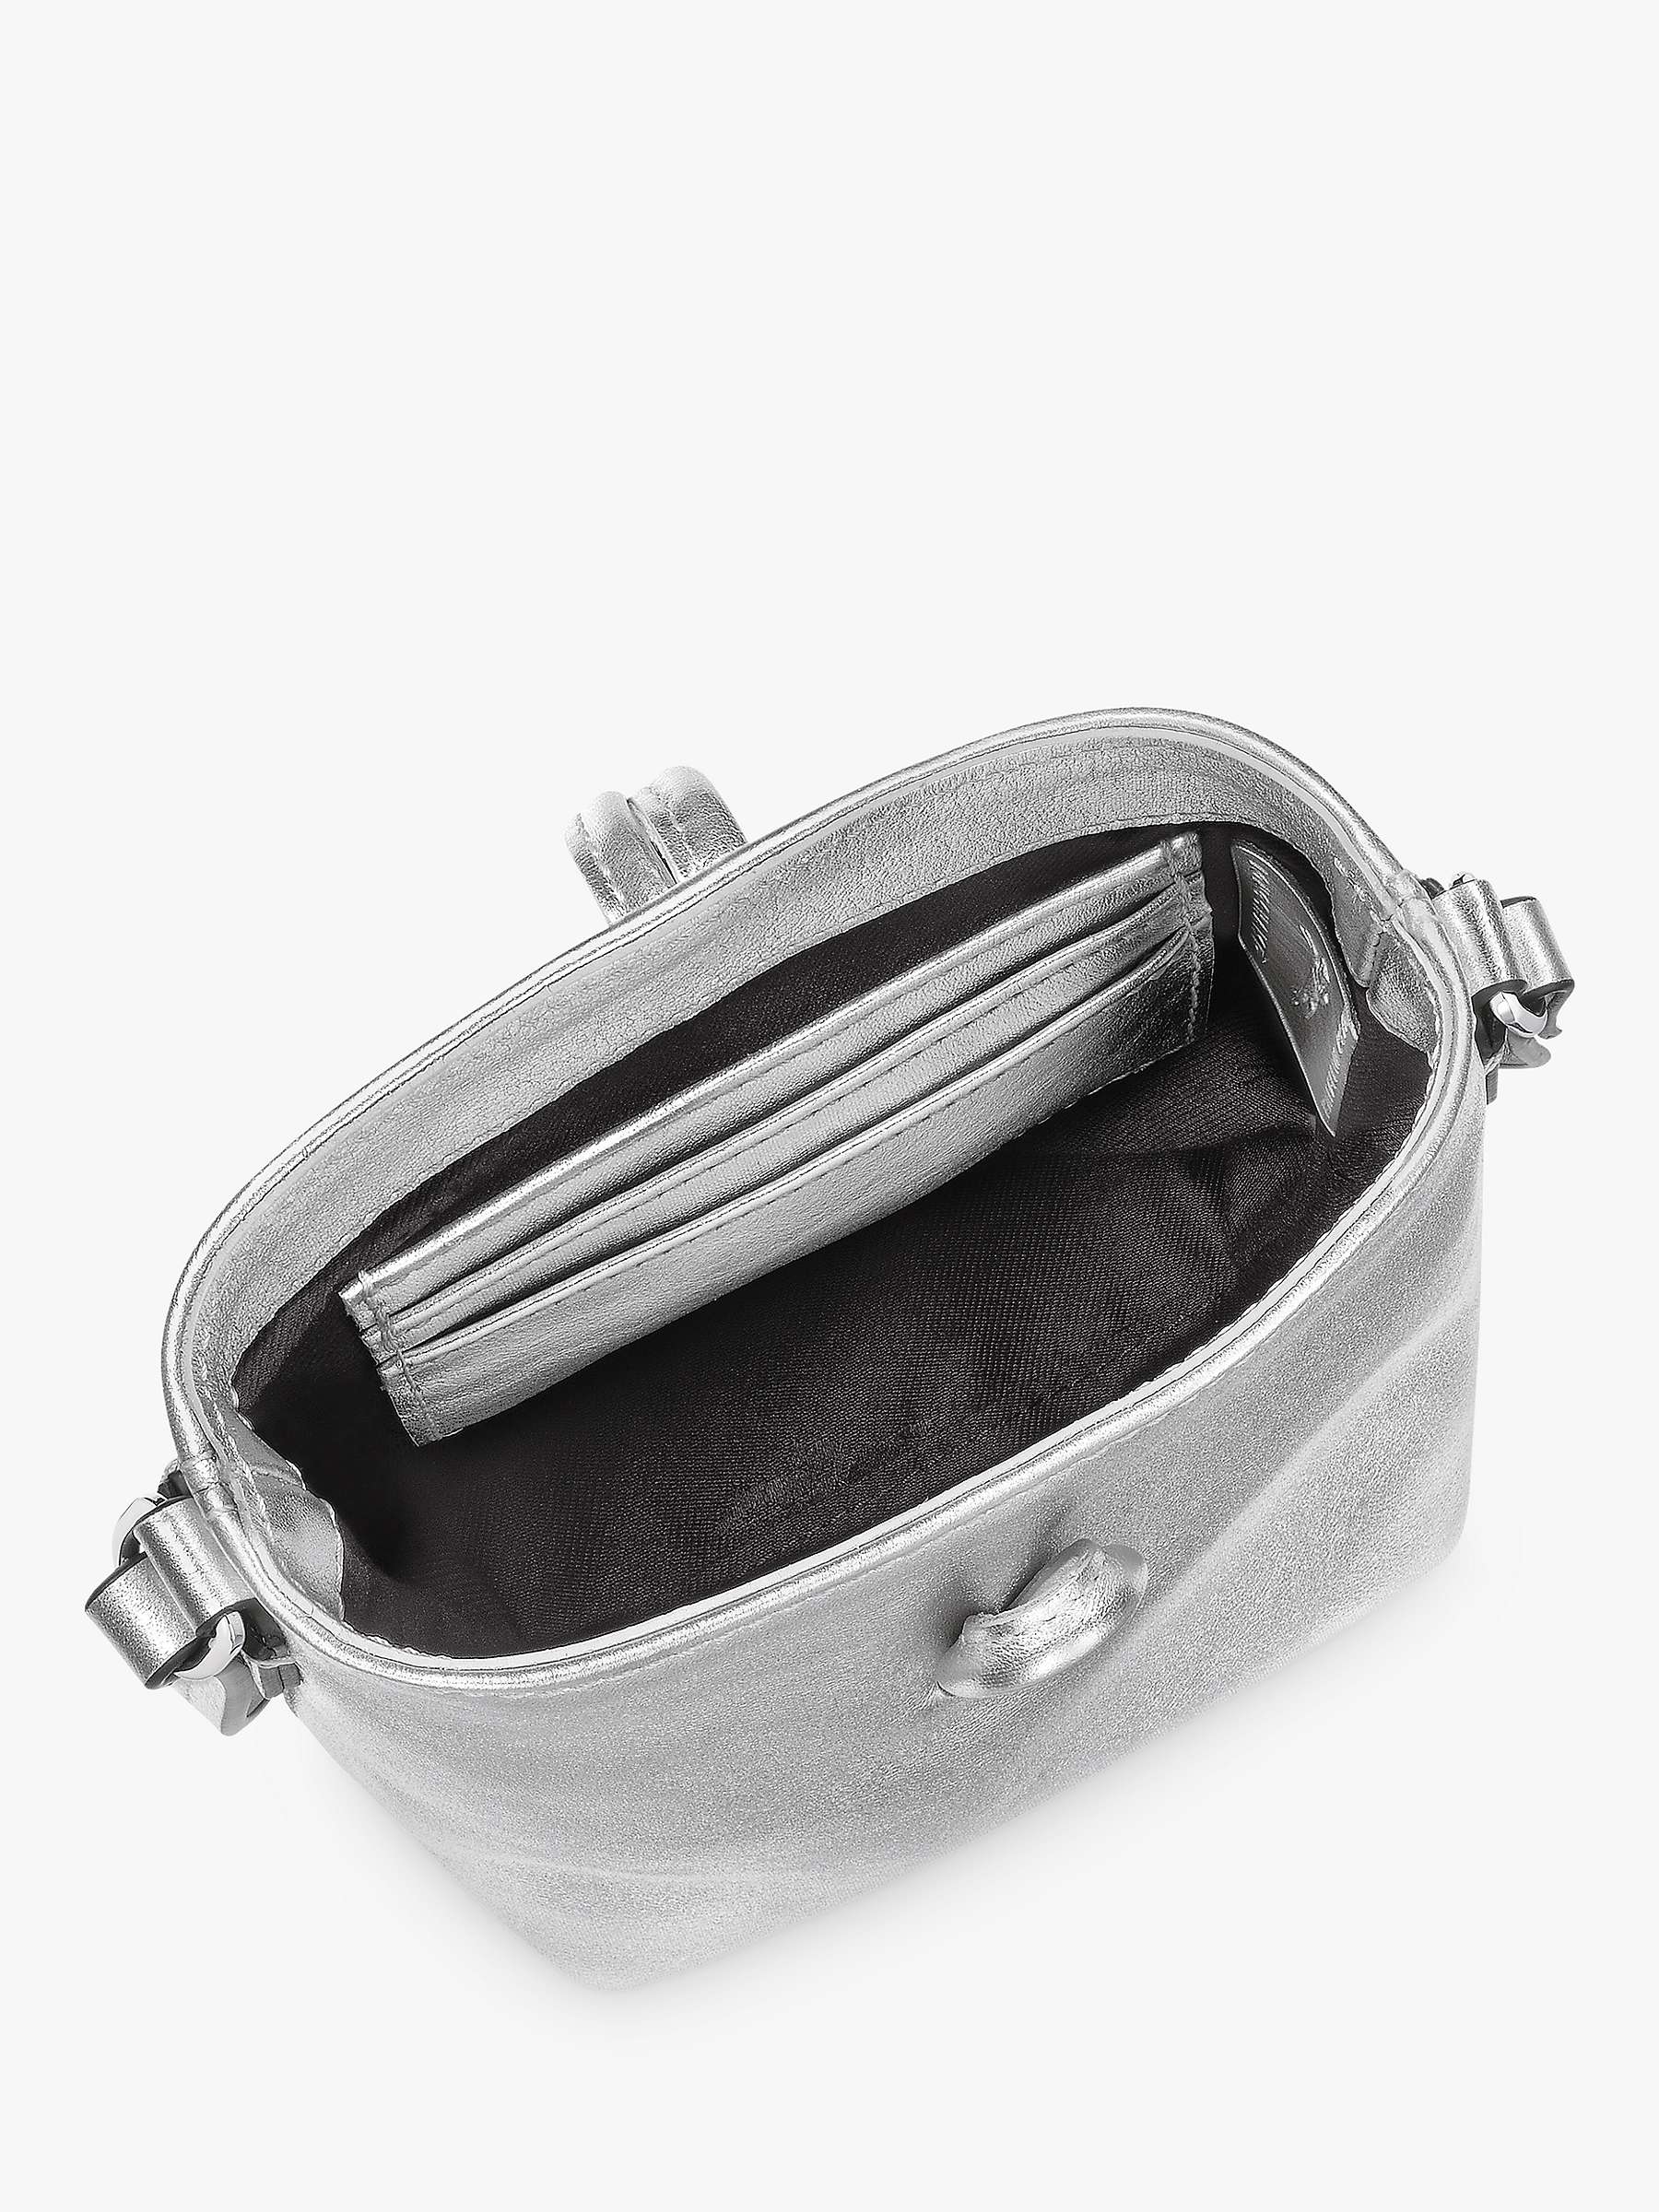 Buy Longchamp Roseau Bucket Bag, Silver Online at johnlewis.com